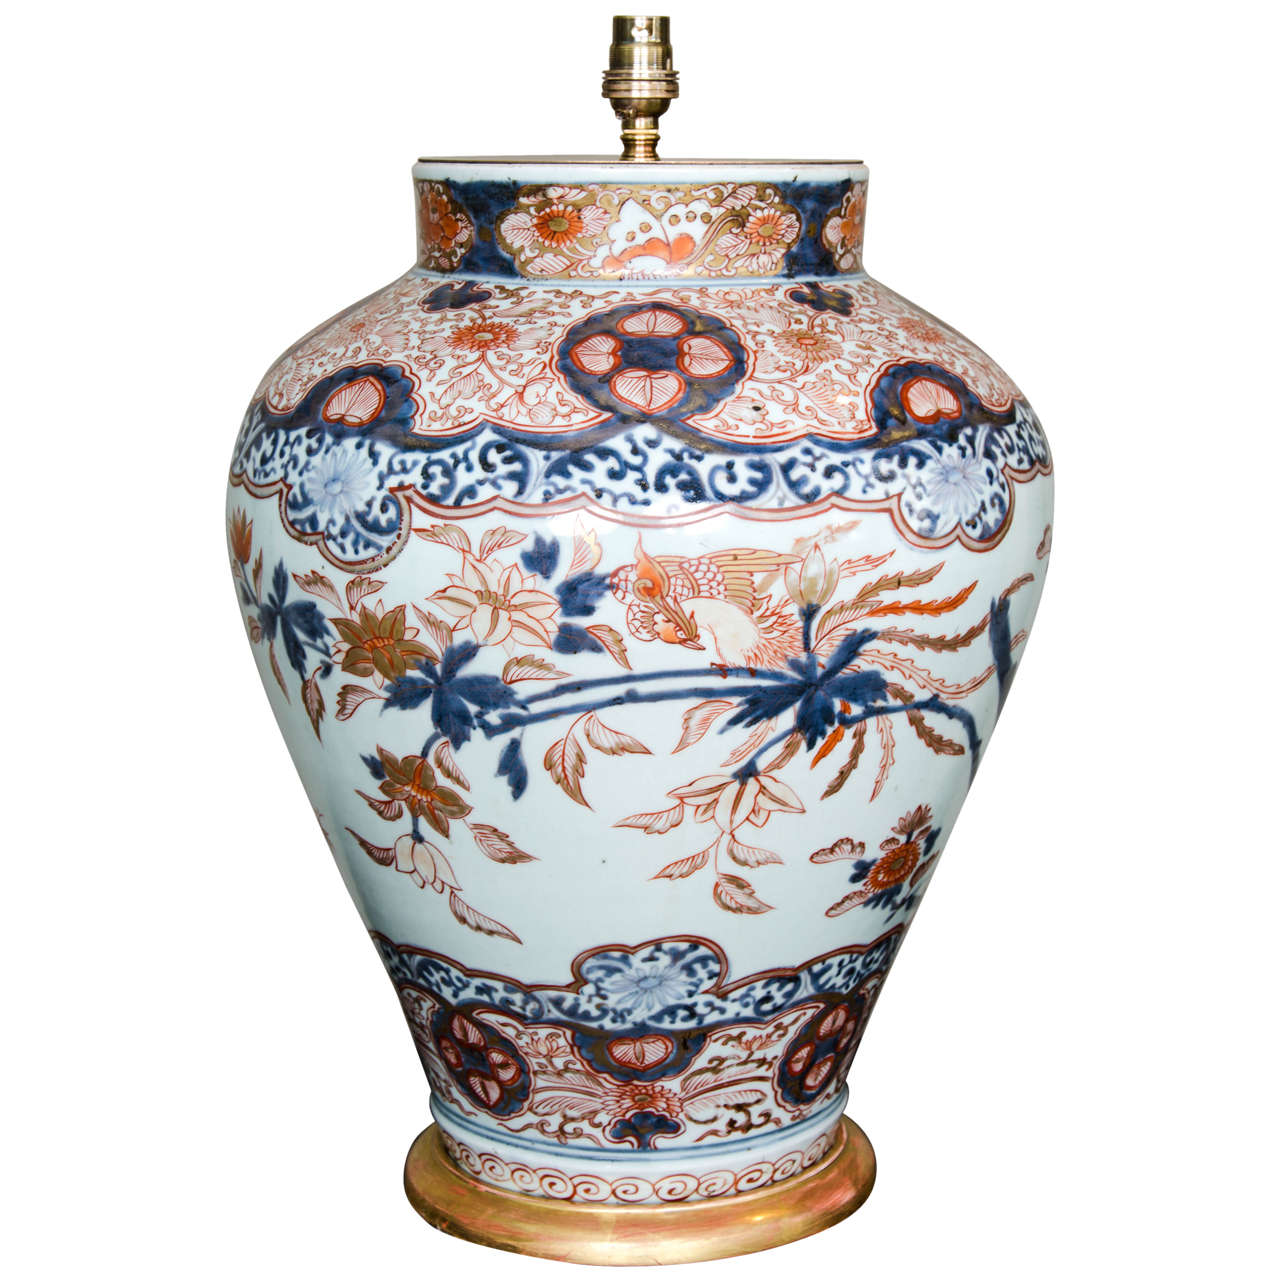 An early 18th Century Lamped Large Japanese Imari Baluster Vase